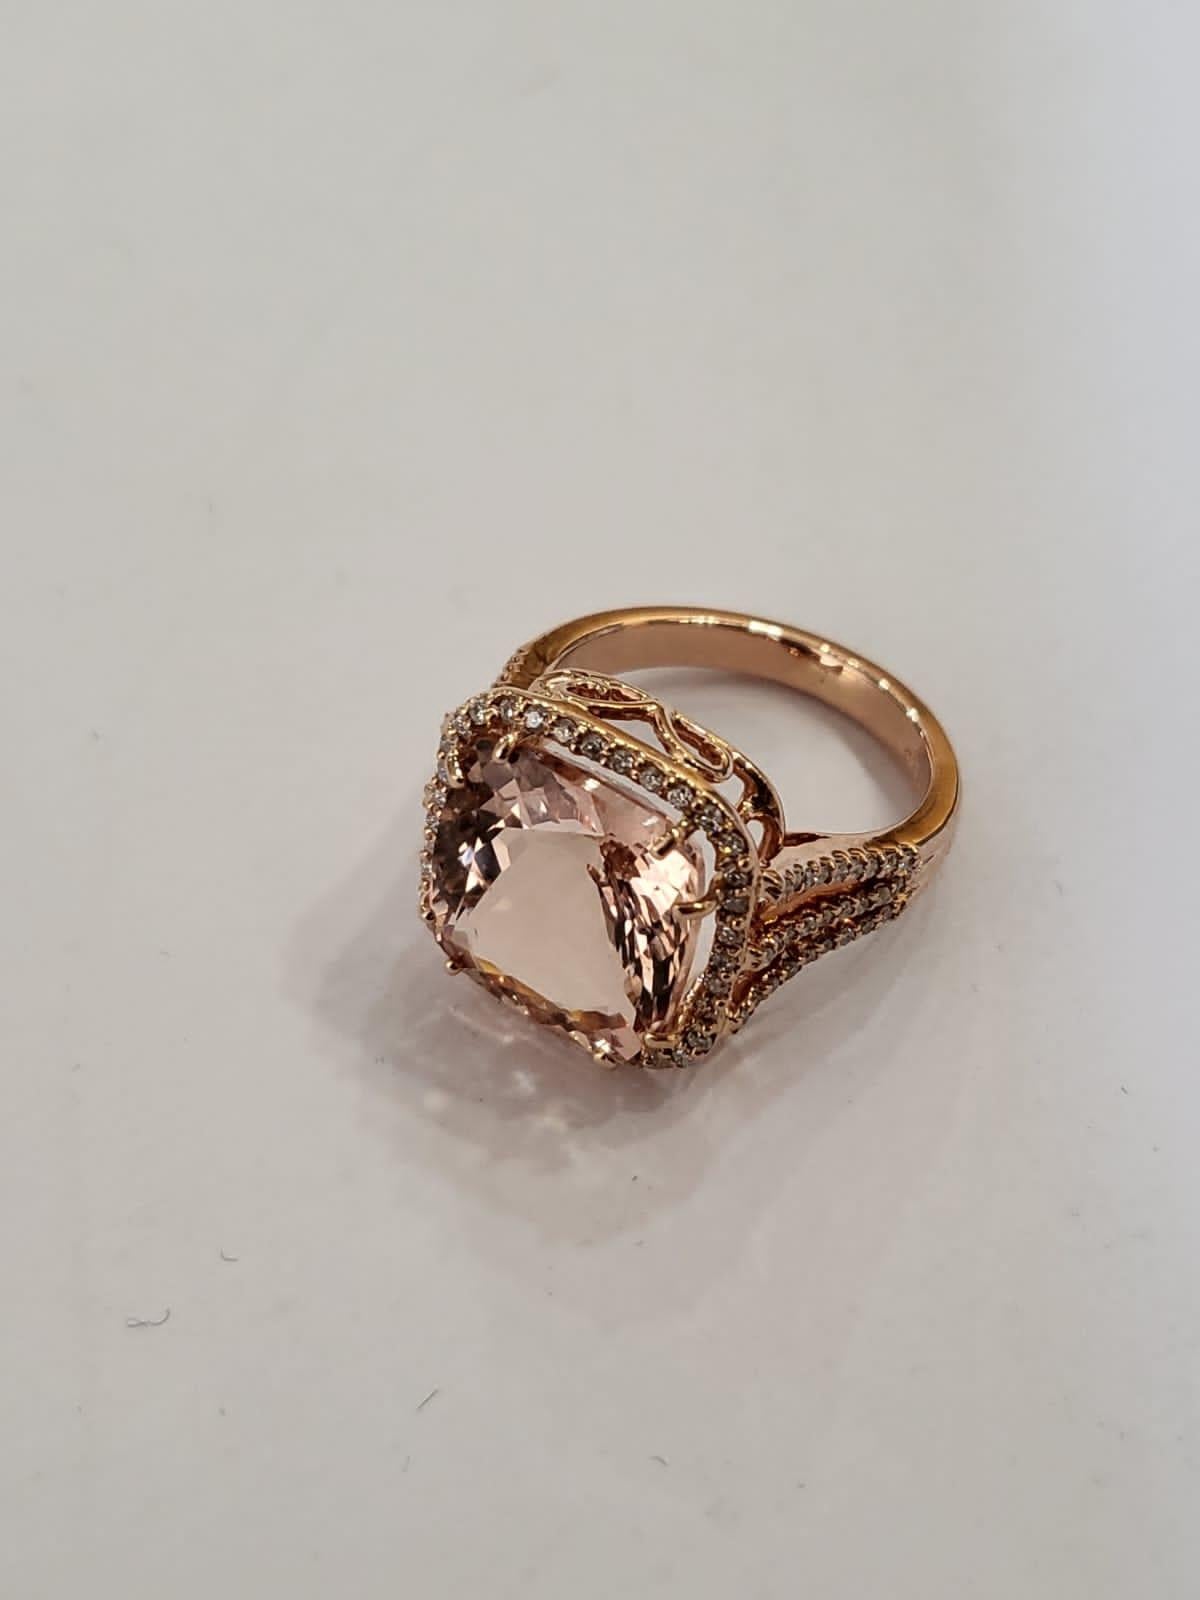 Cushion Cut Set in 18k Rose Gold, 8.08 Carats Morganite & Diamonds Engagement Cocktail Ring